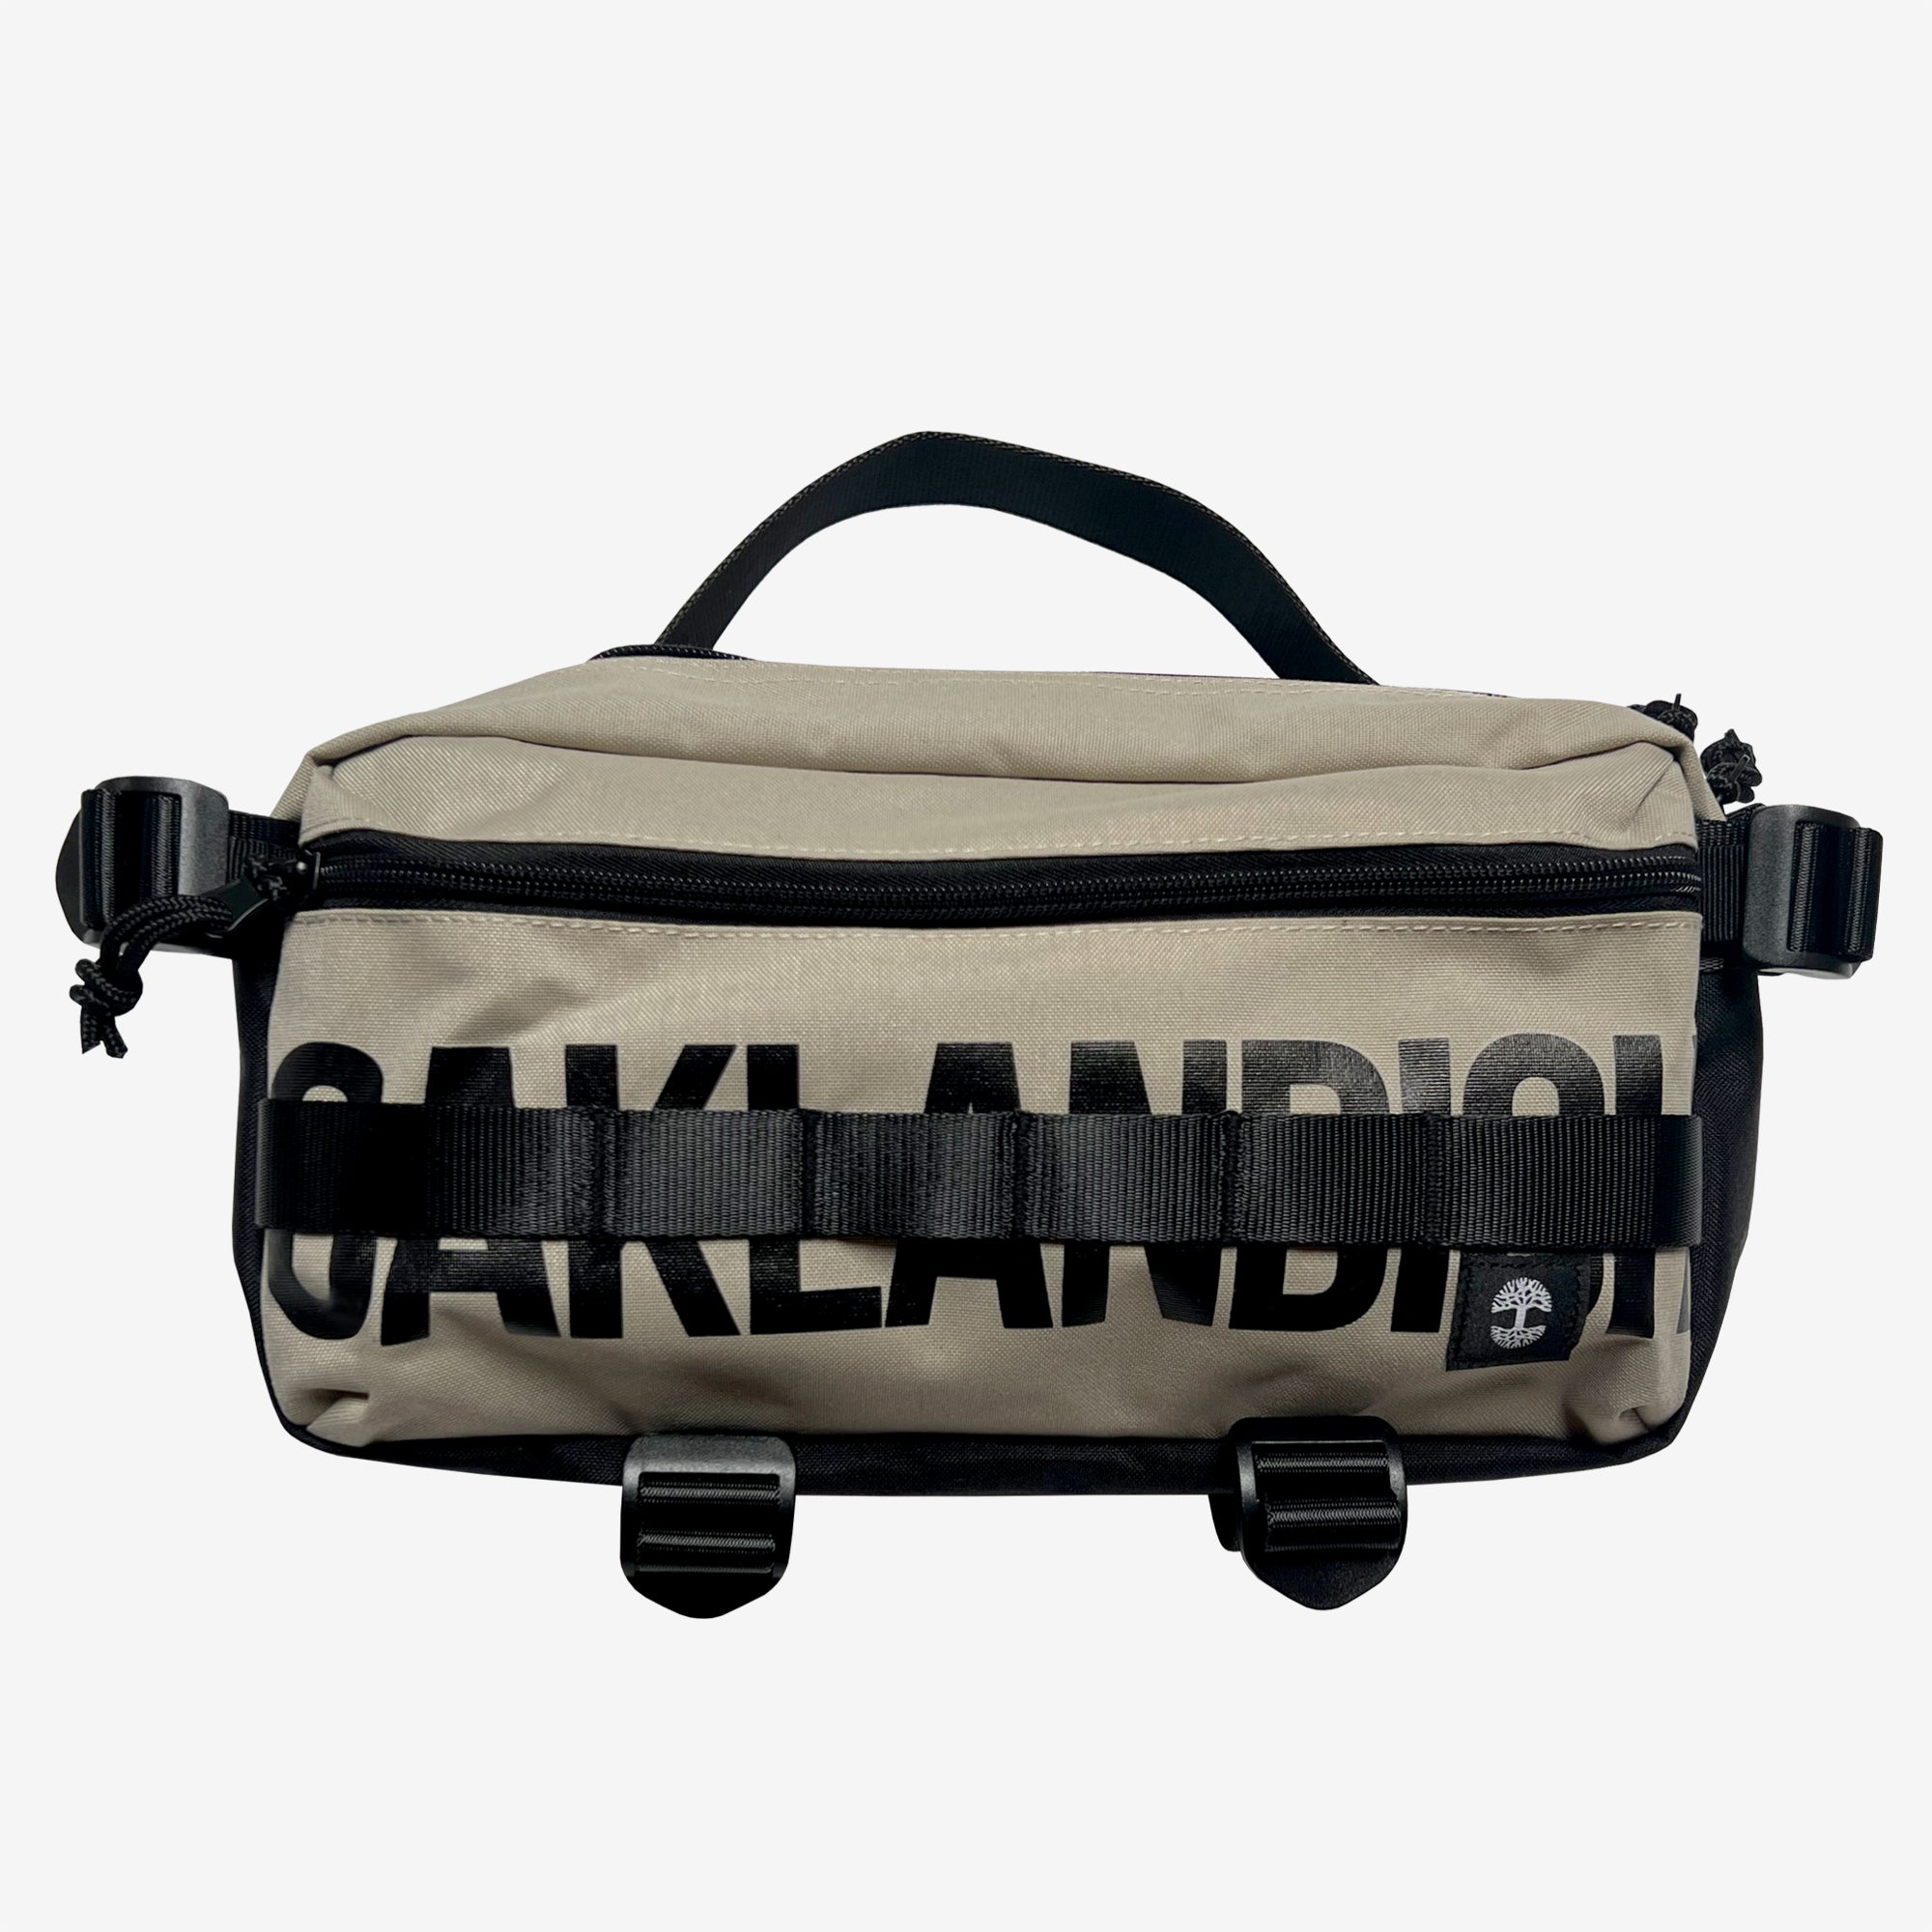 A sand brown hip bag with a black Oaklandish wordmark, top zipper & handle, waist belt, & small white Oaklandish tree logo.